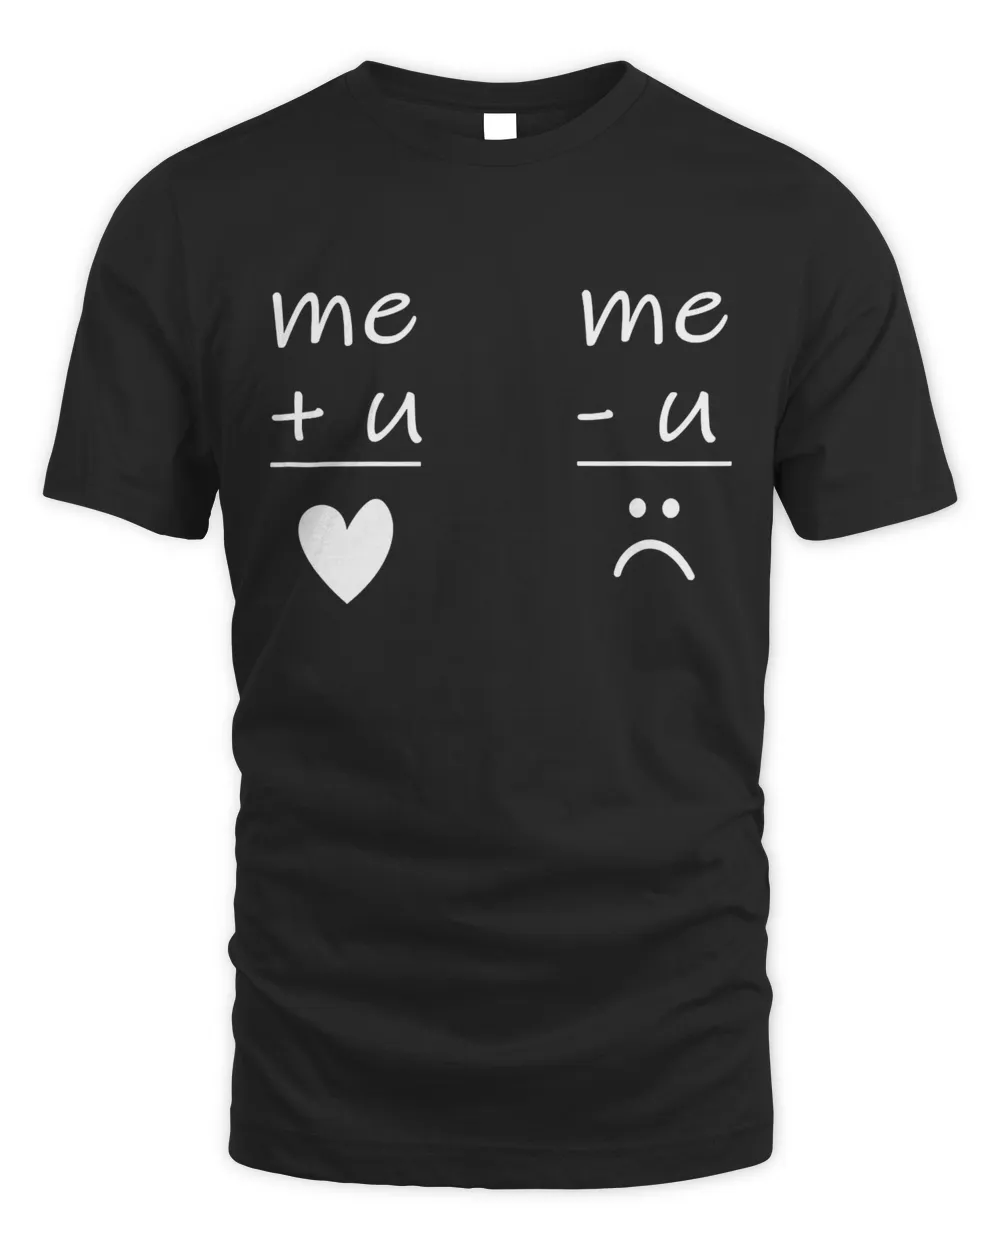 Me + u = love and Me - u = sad - friends, family, girlfriend T-Shirt